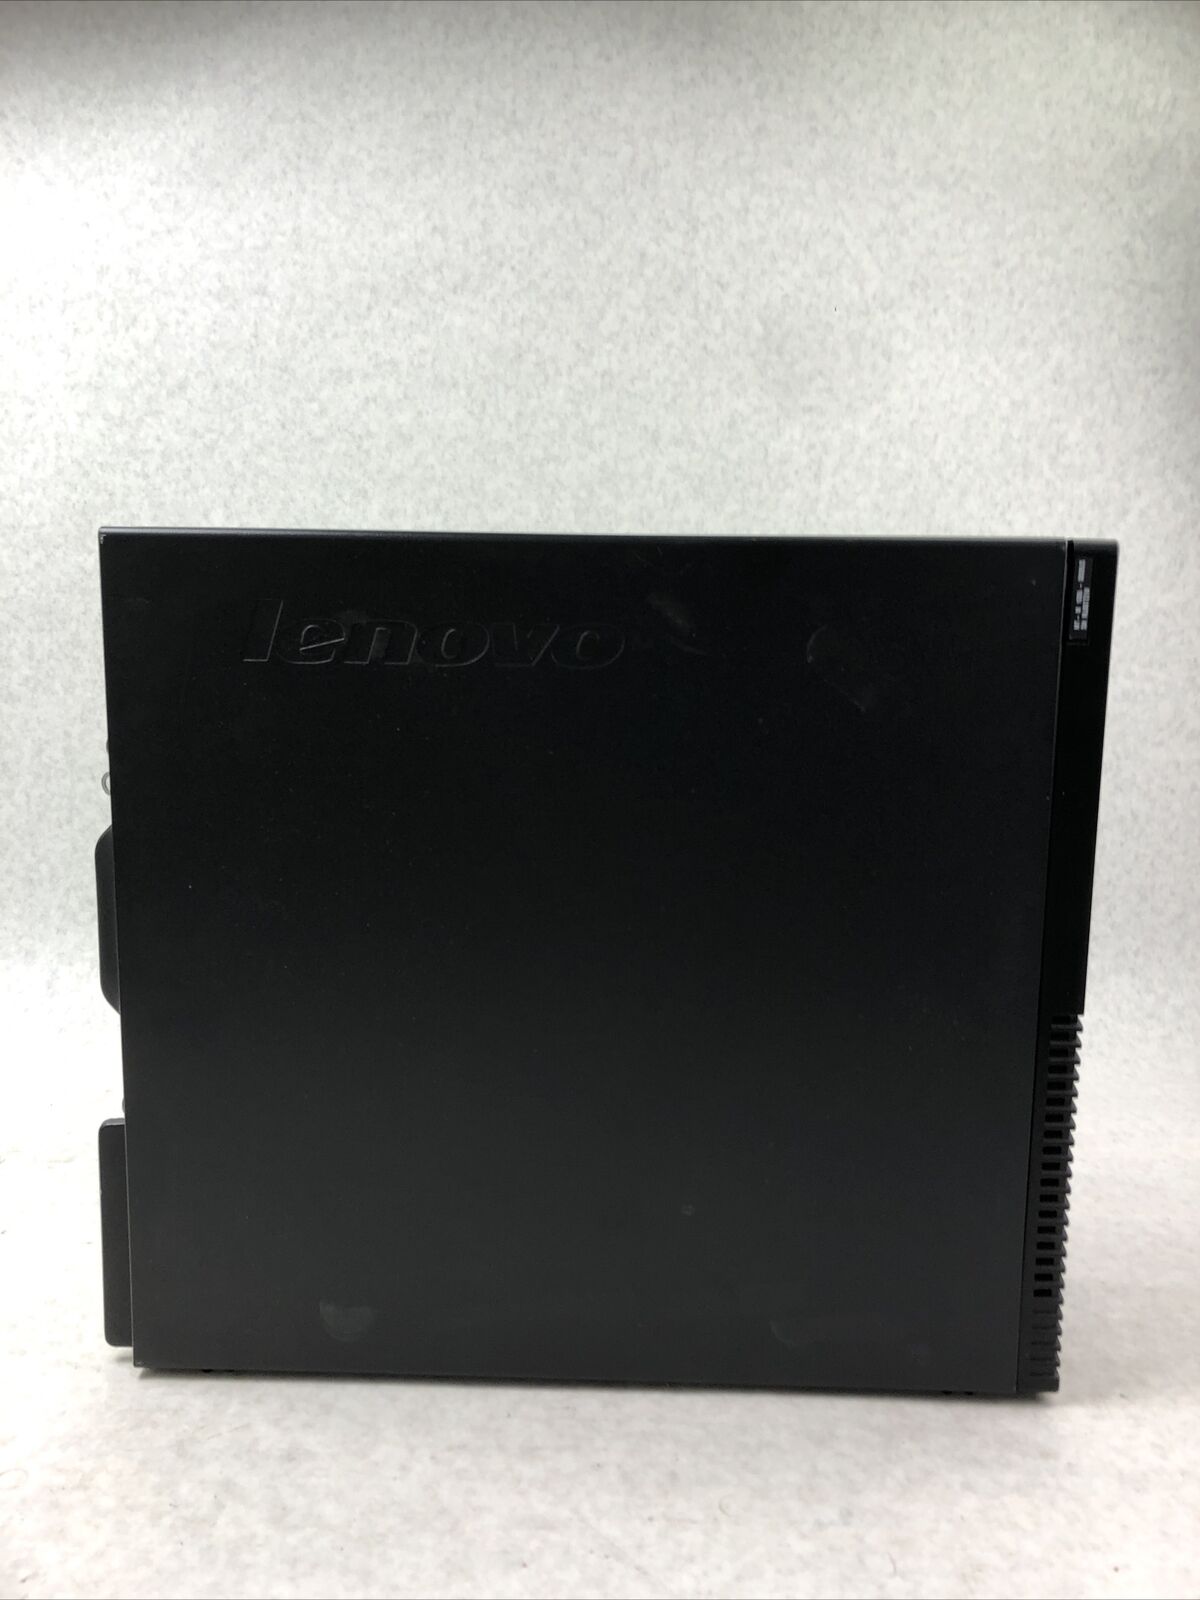 Lenovo ThinkCentre MT-M10B6 MT Intel Core i5-4570 3.2GHz 8GB RAM No HDD